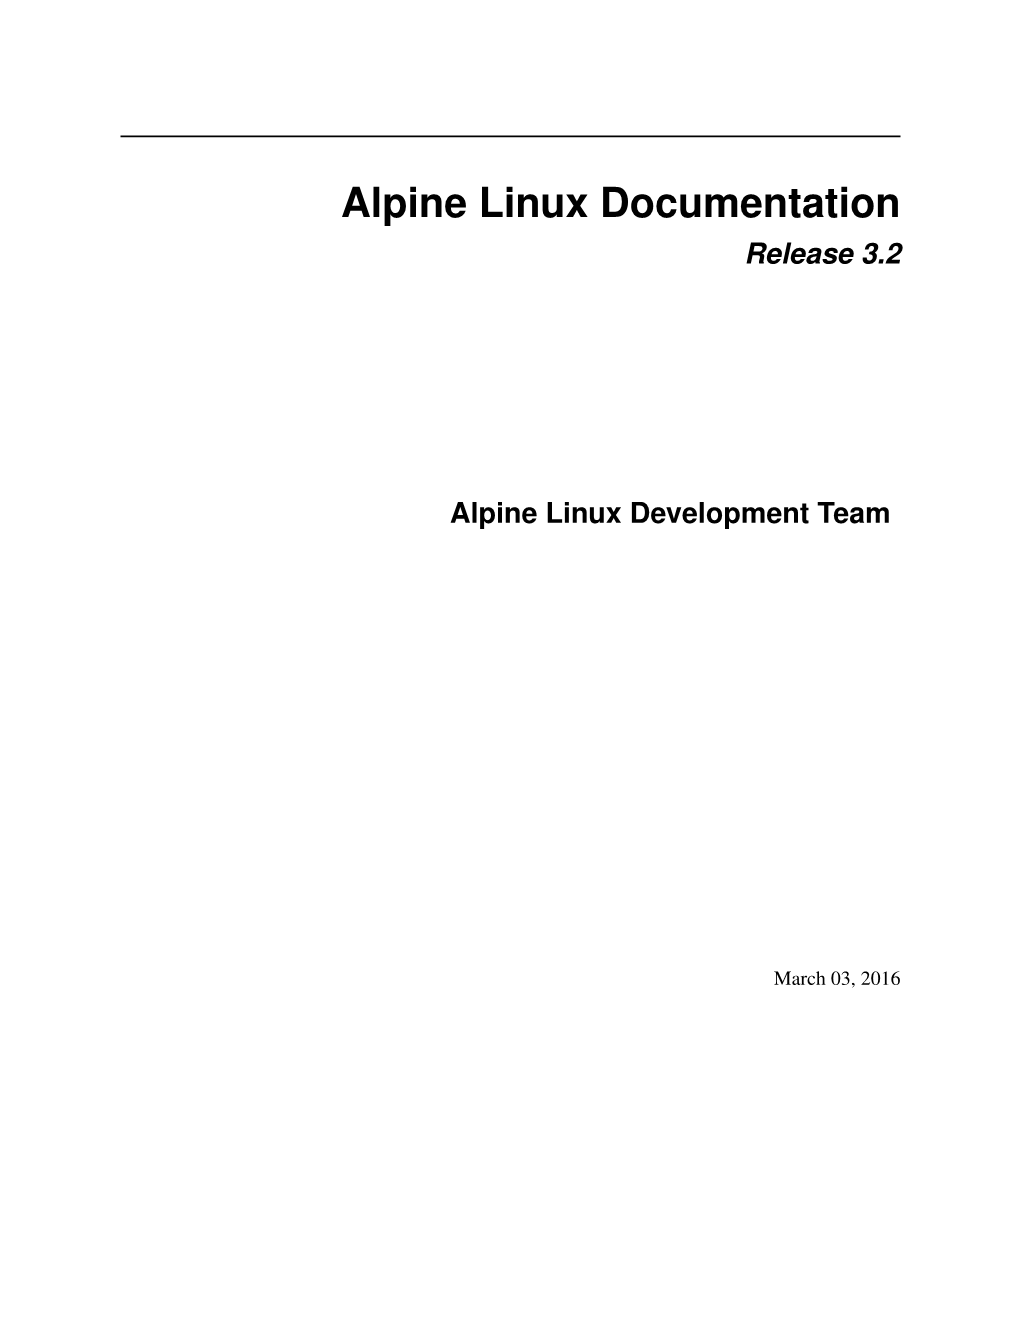 Alpine Linux Documentation Release 3.2